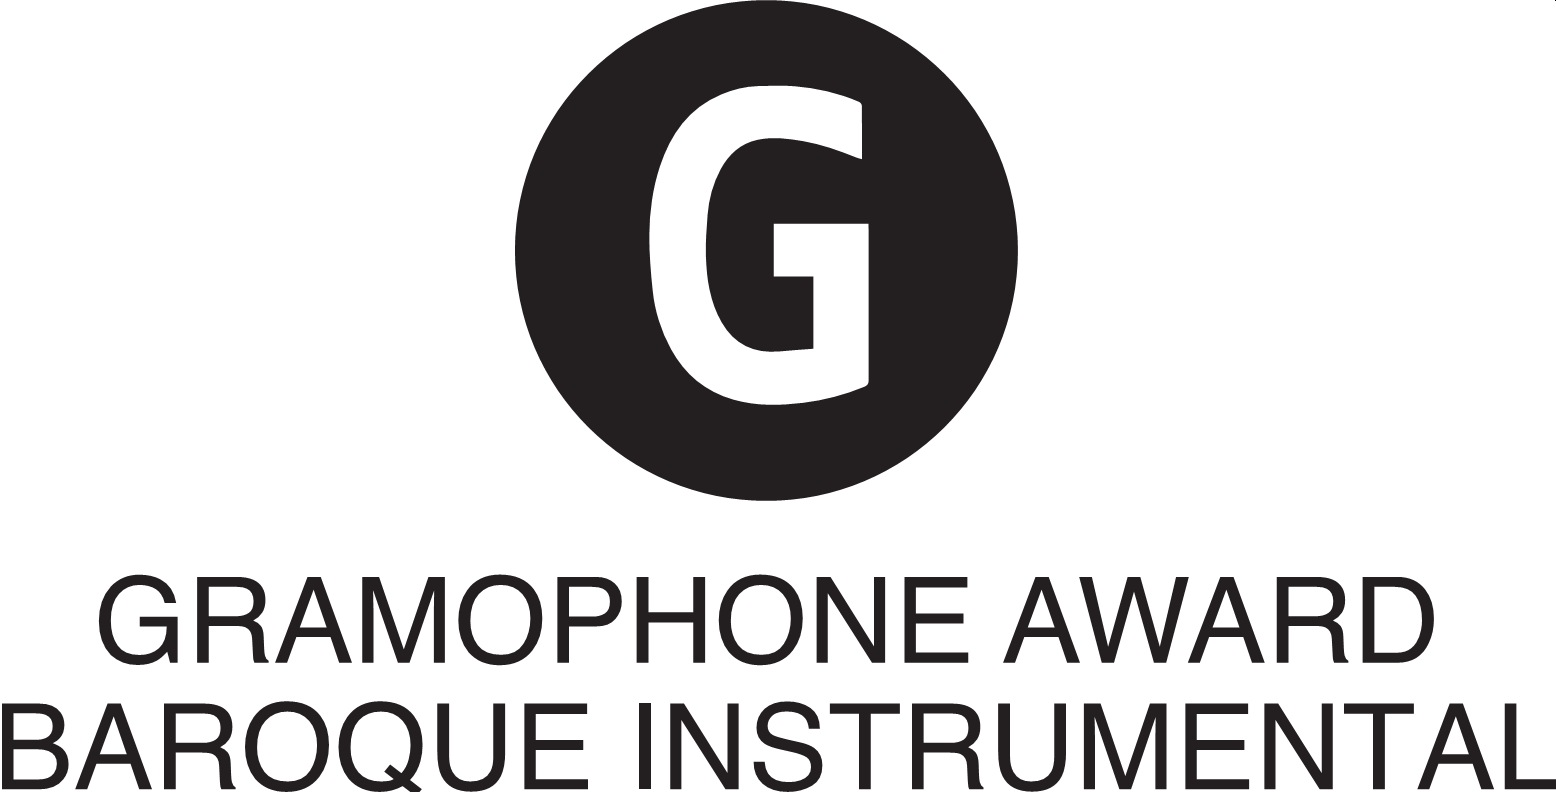 Gramophone Award: 'Baroque Instrumental' (2012)